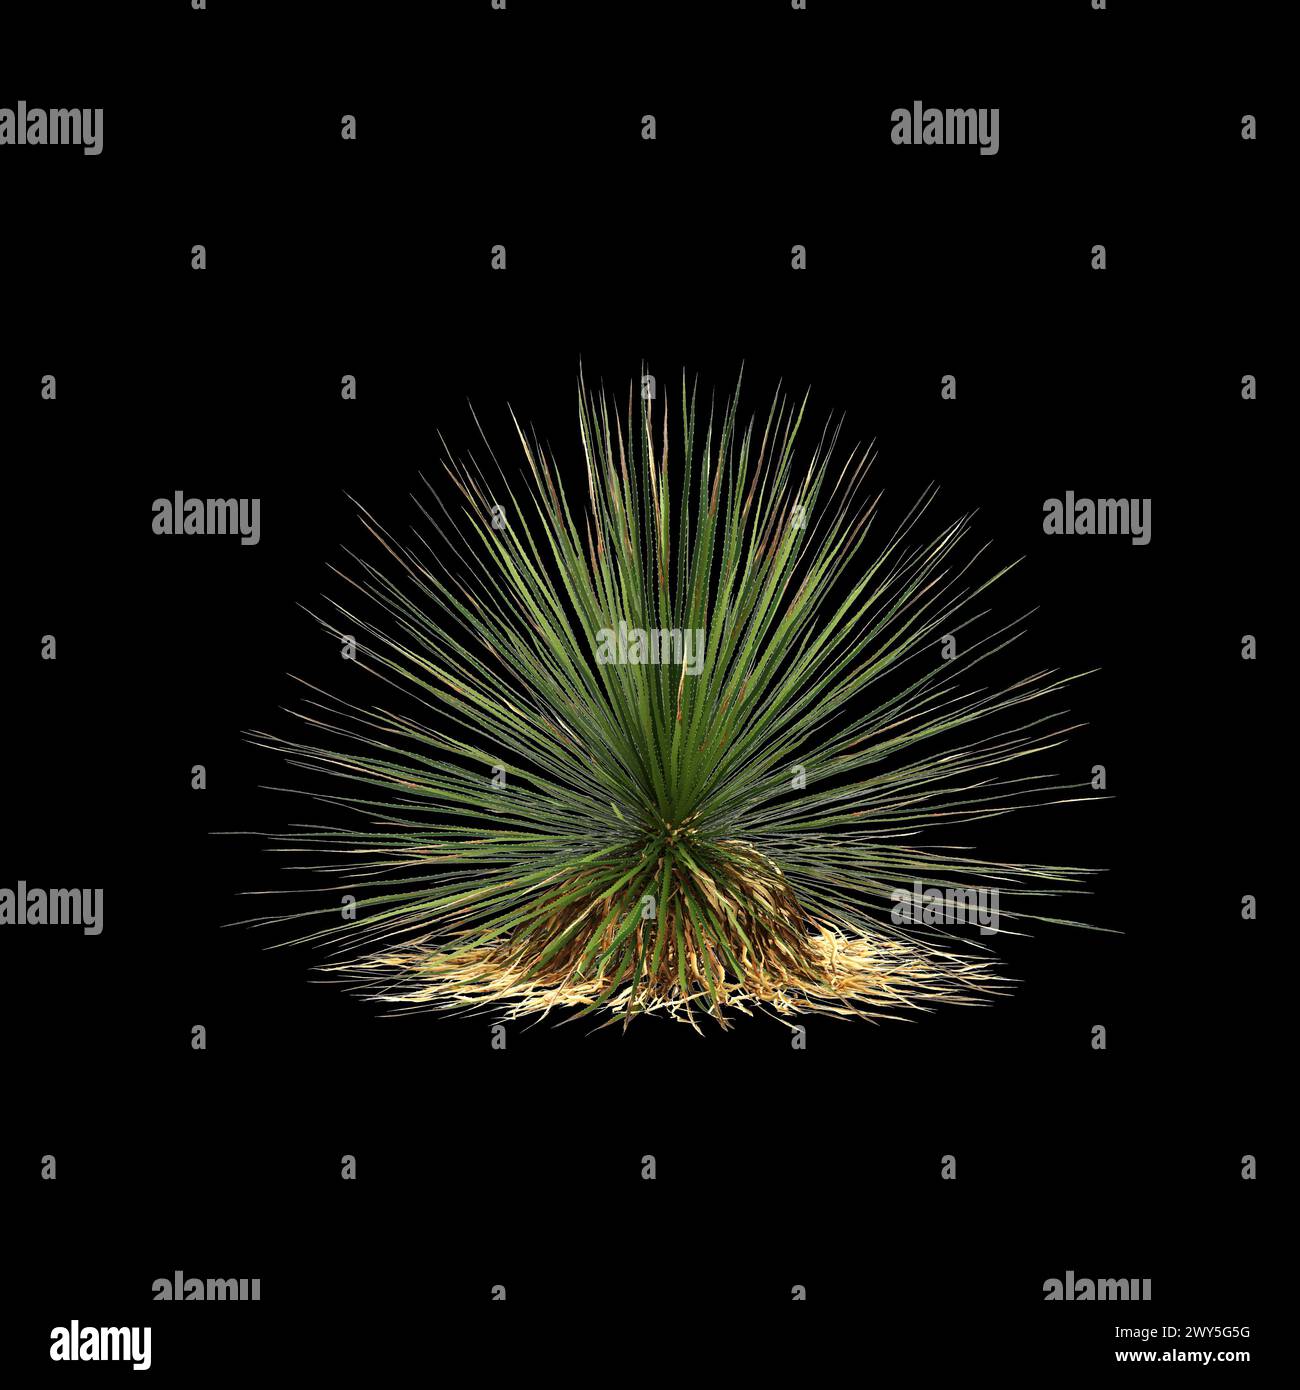 3d illustration of Dasylirion texanum bush isolated on black background Stock Photo